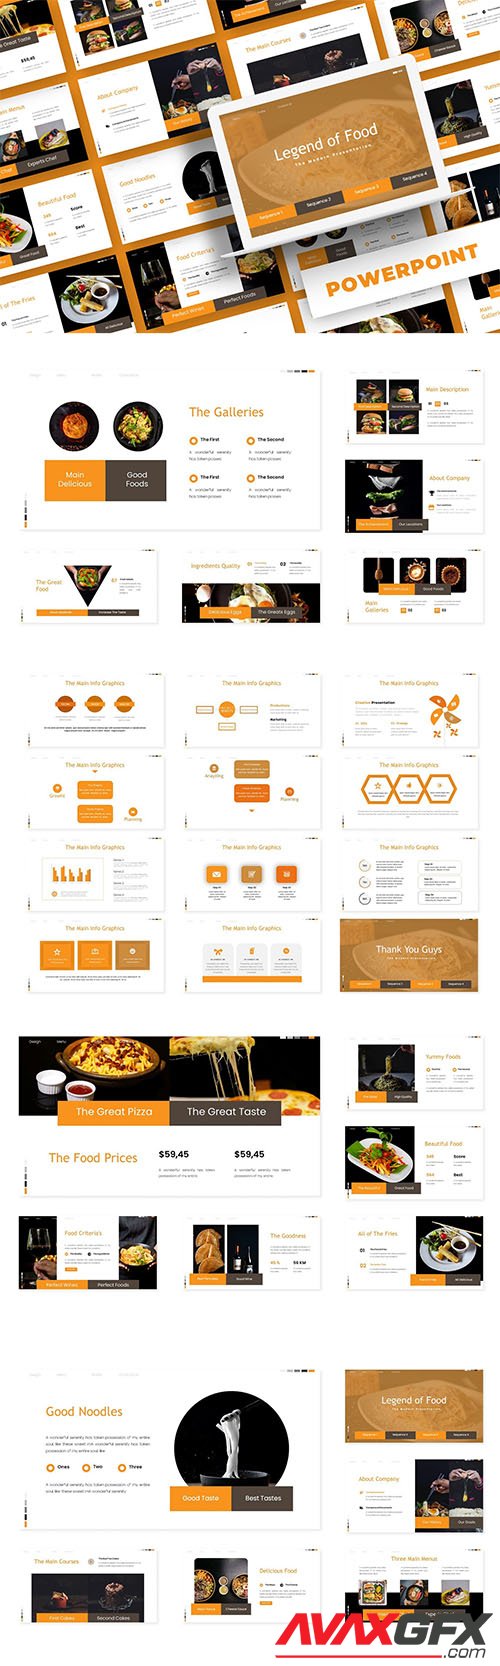 Legend Of Food - PowerPoint, Keynote, Google Slides Templates